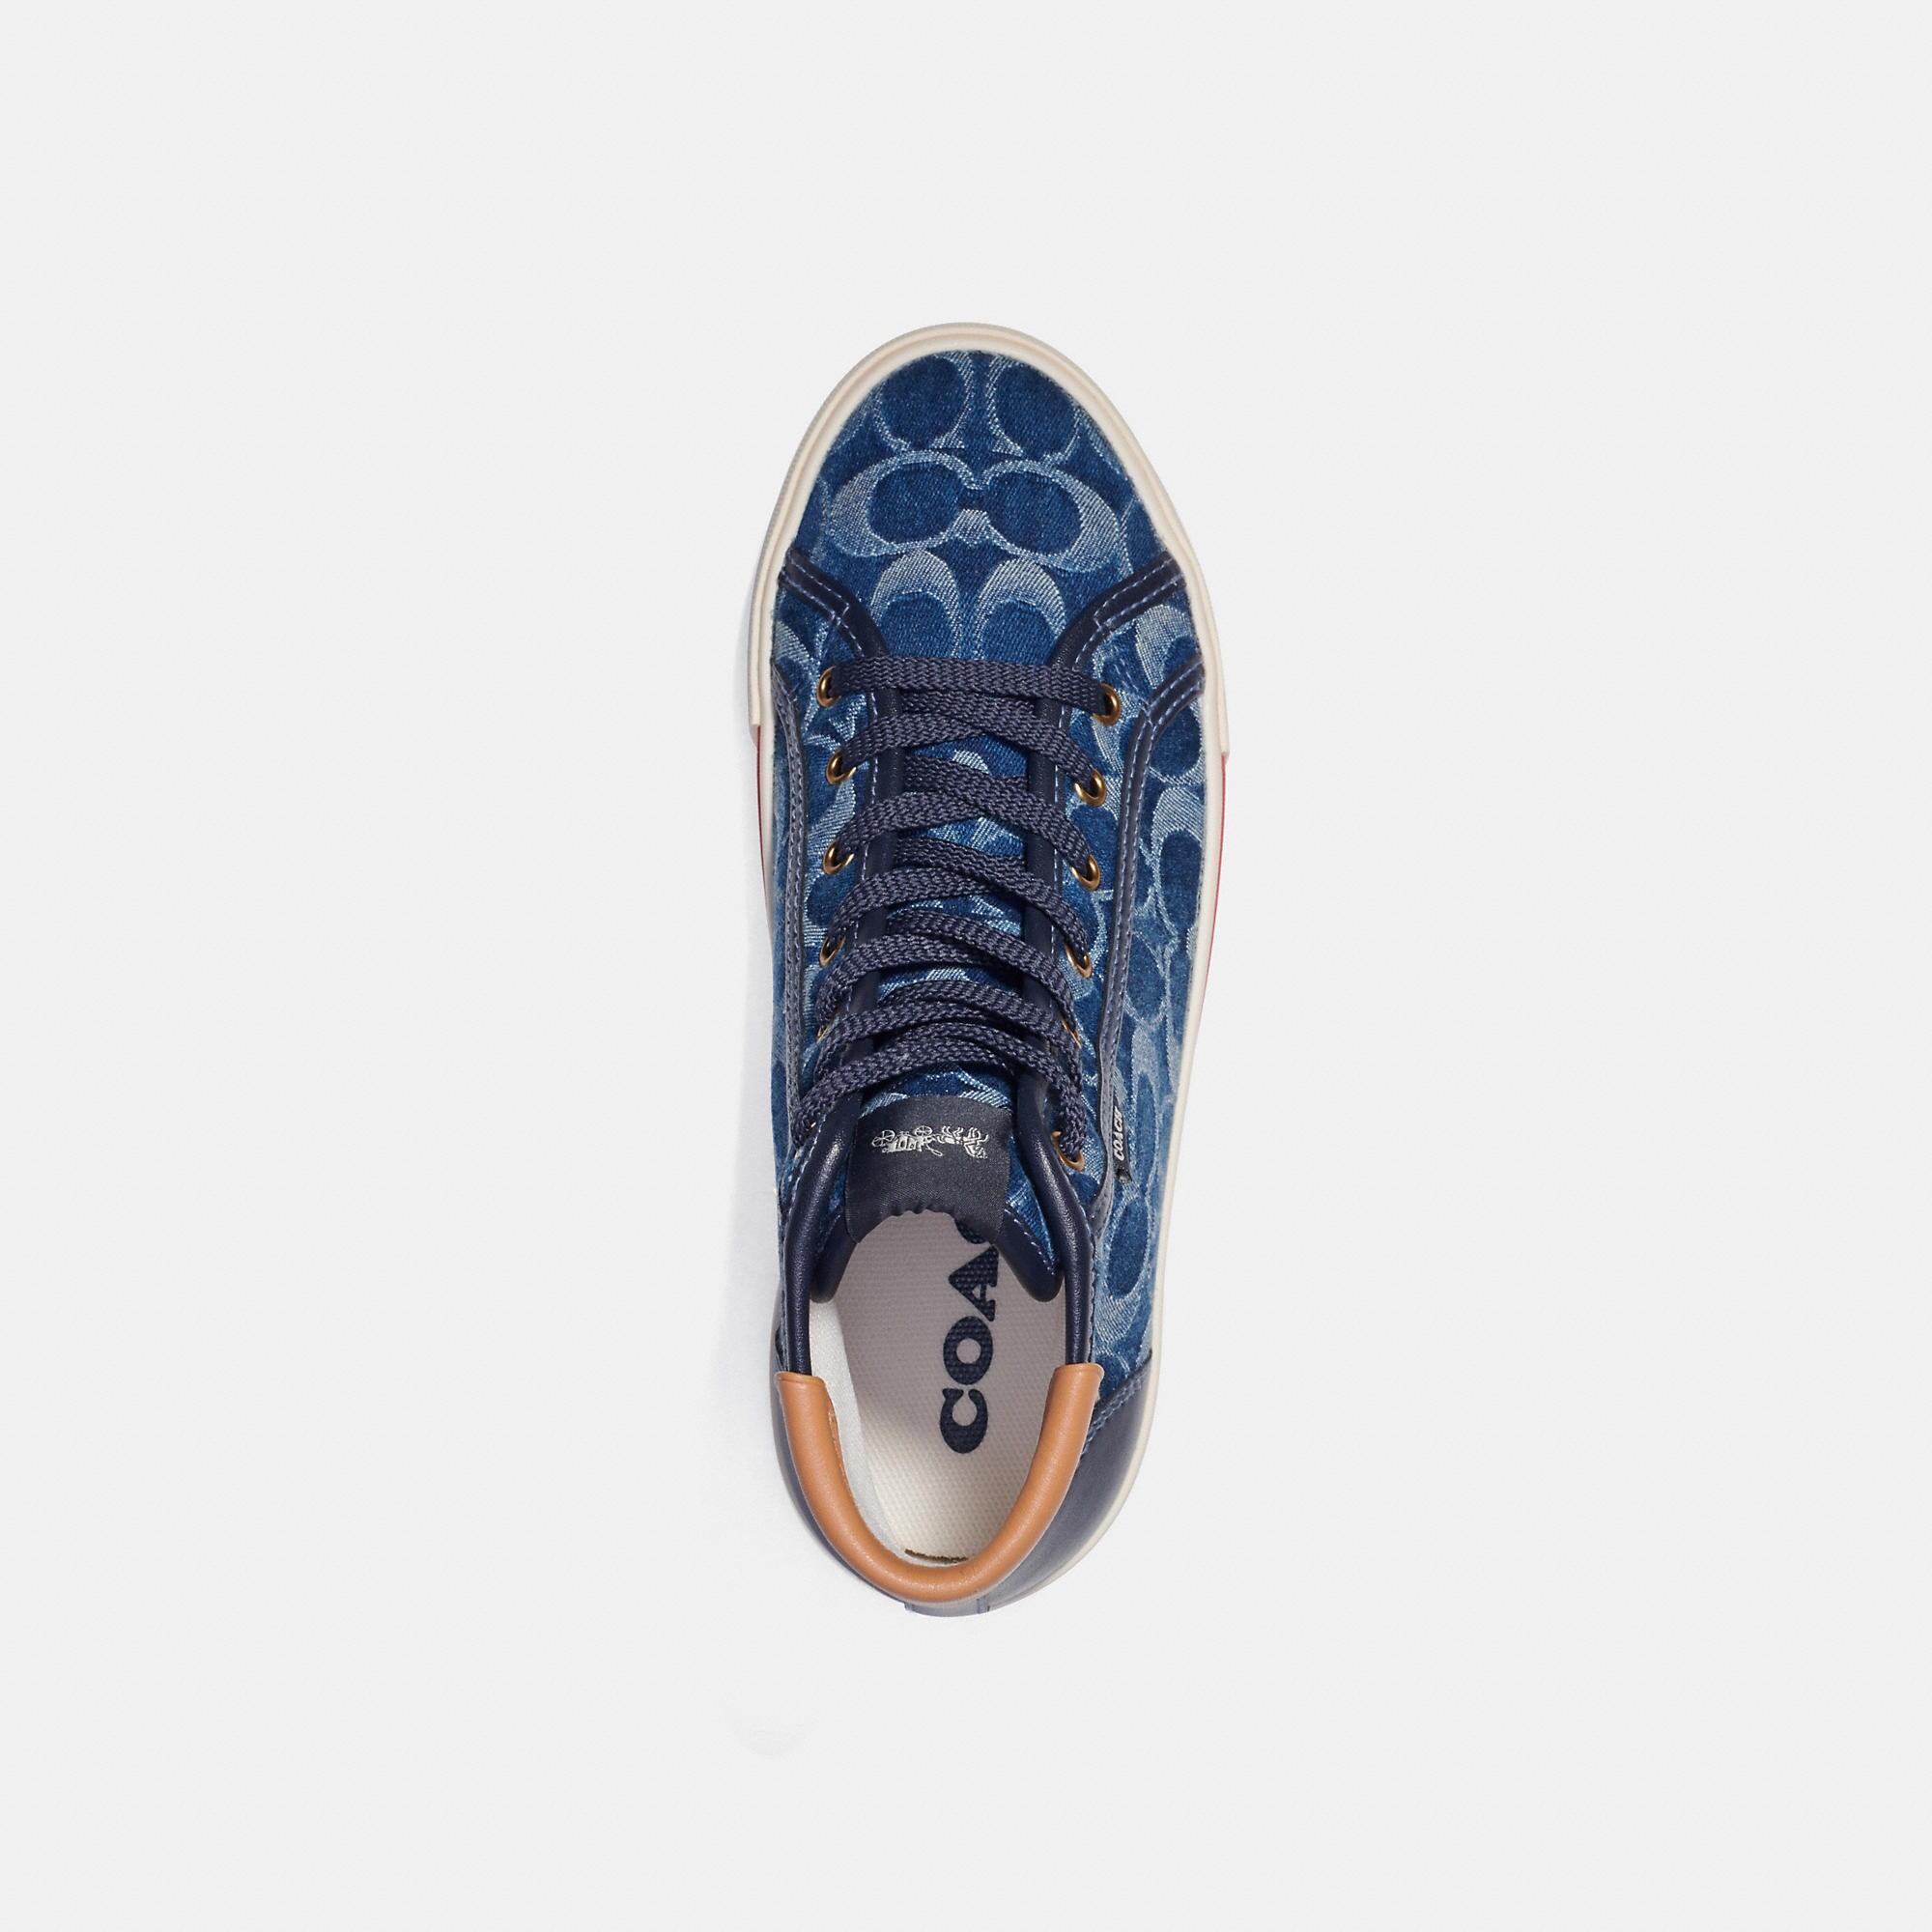 Blue denim trainers with white flatform sole